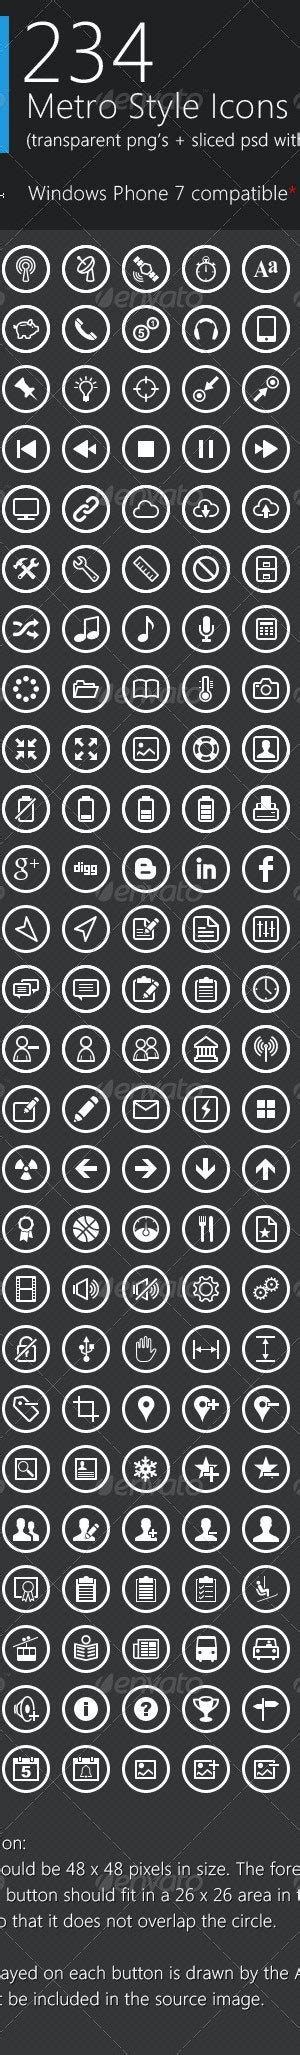 234 Unique Metro Style Icons Icons Graphicriver